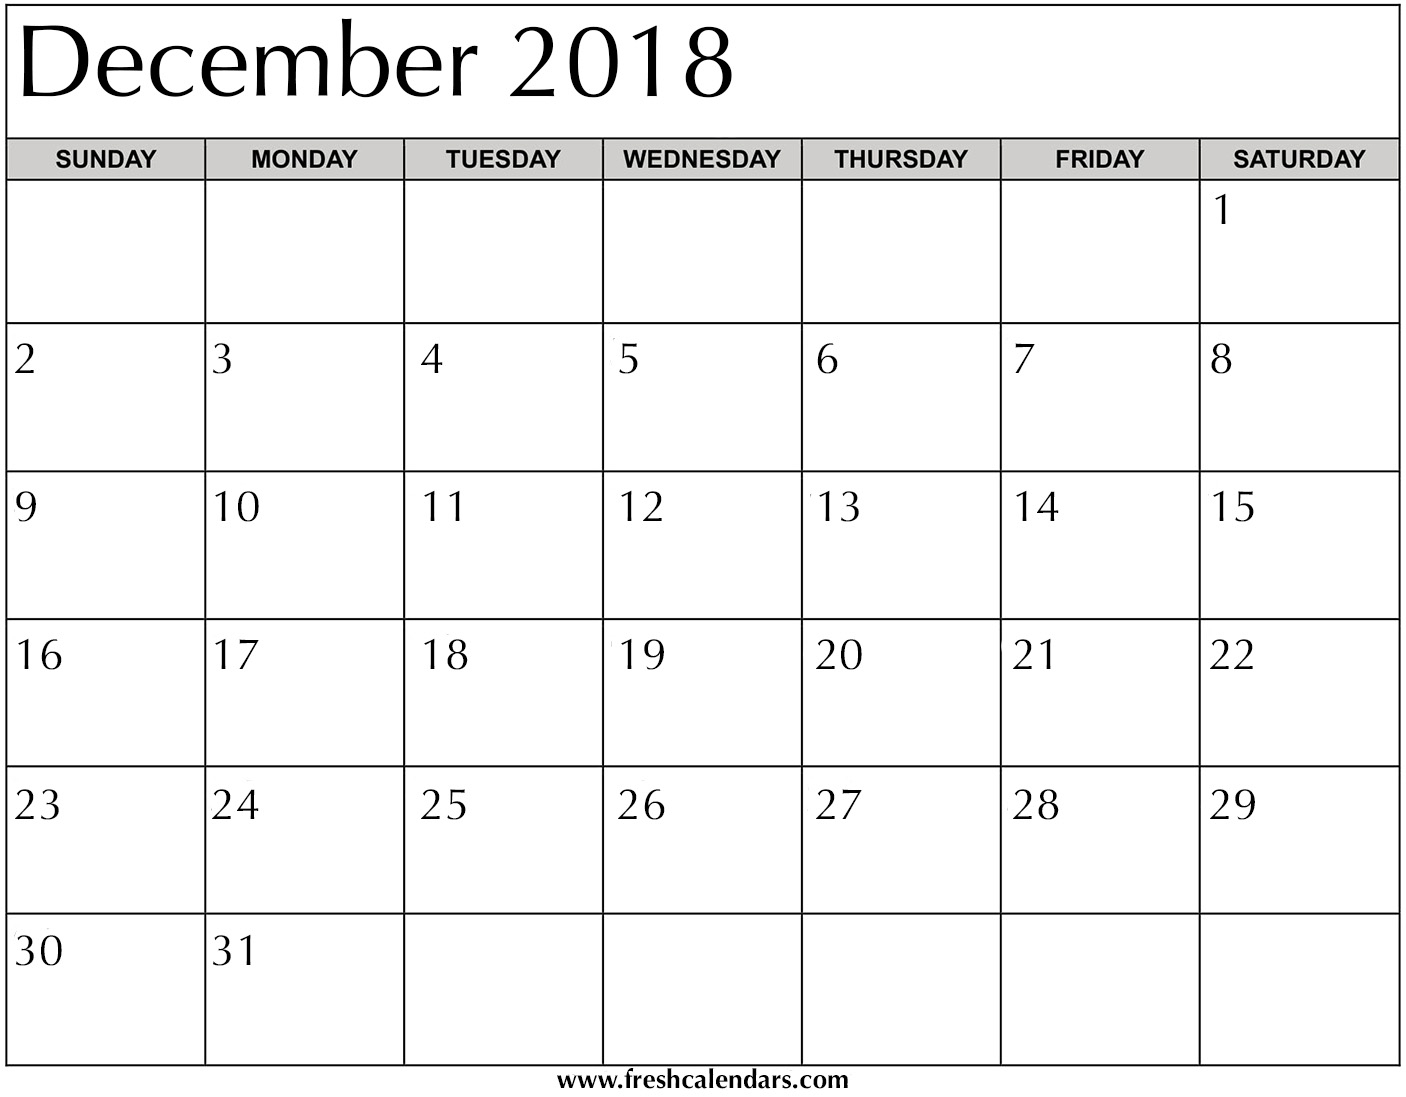 December 2018 Calendar Printable - Fresh Calendars